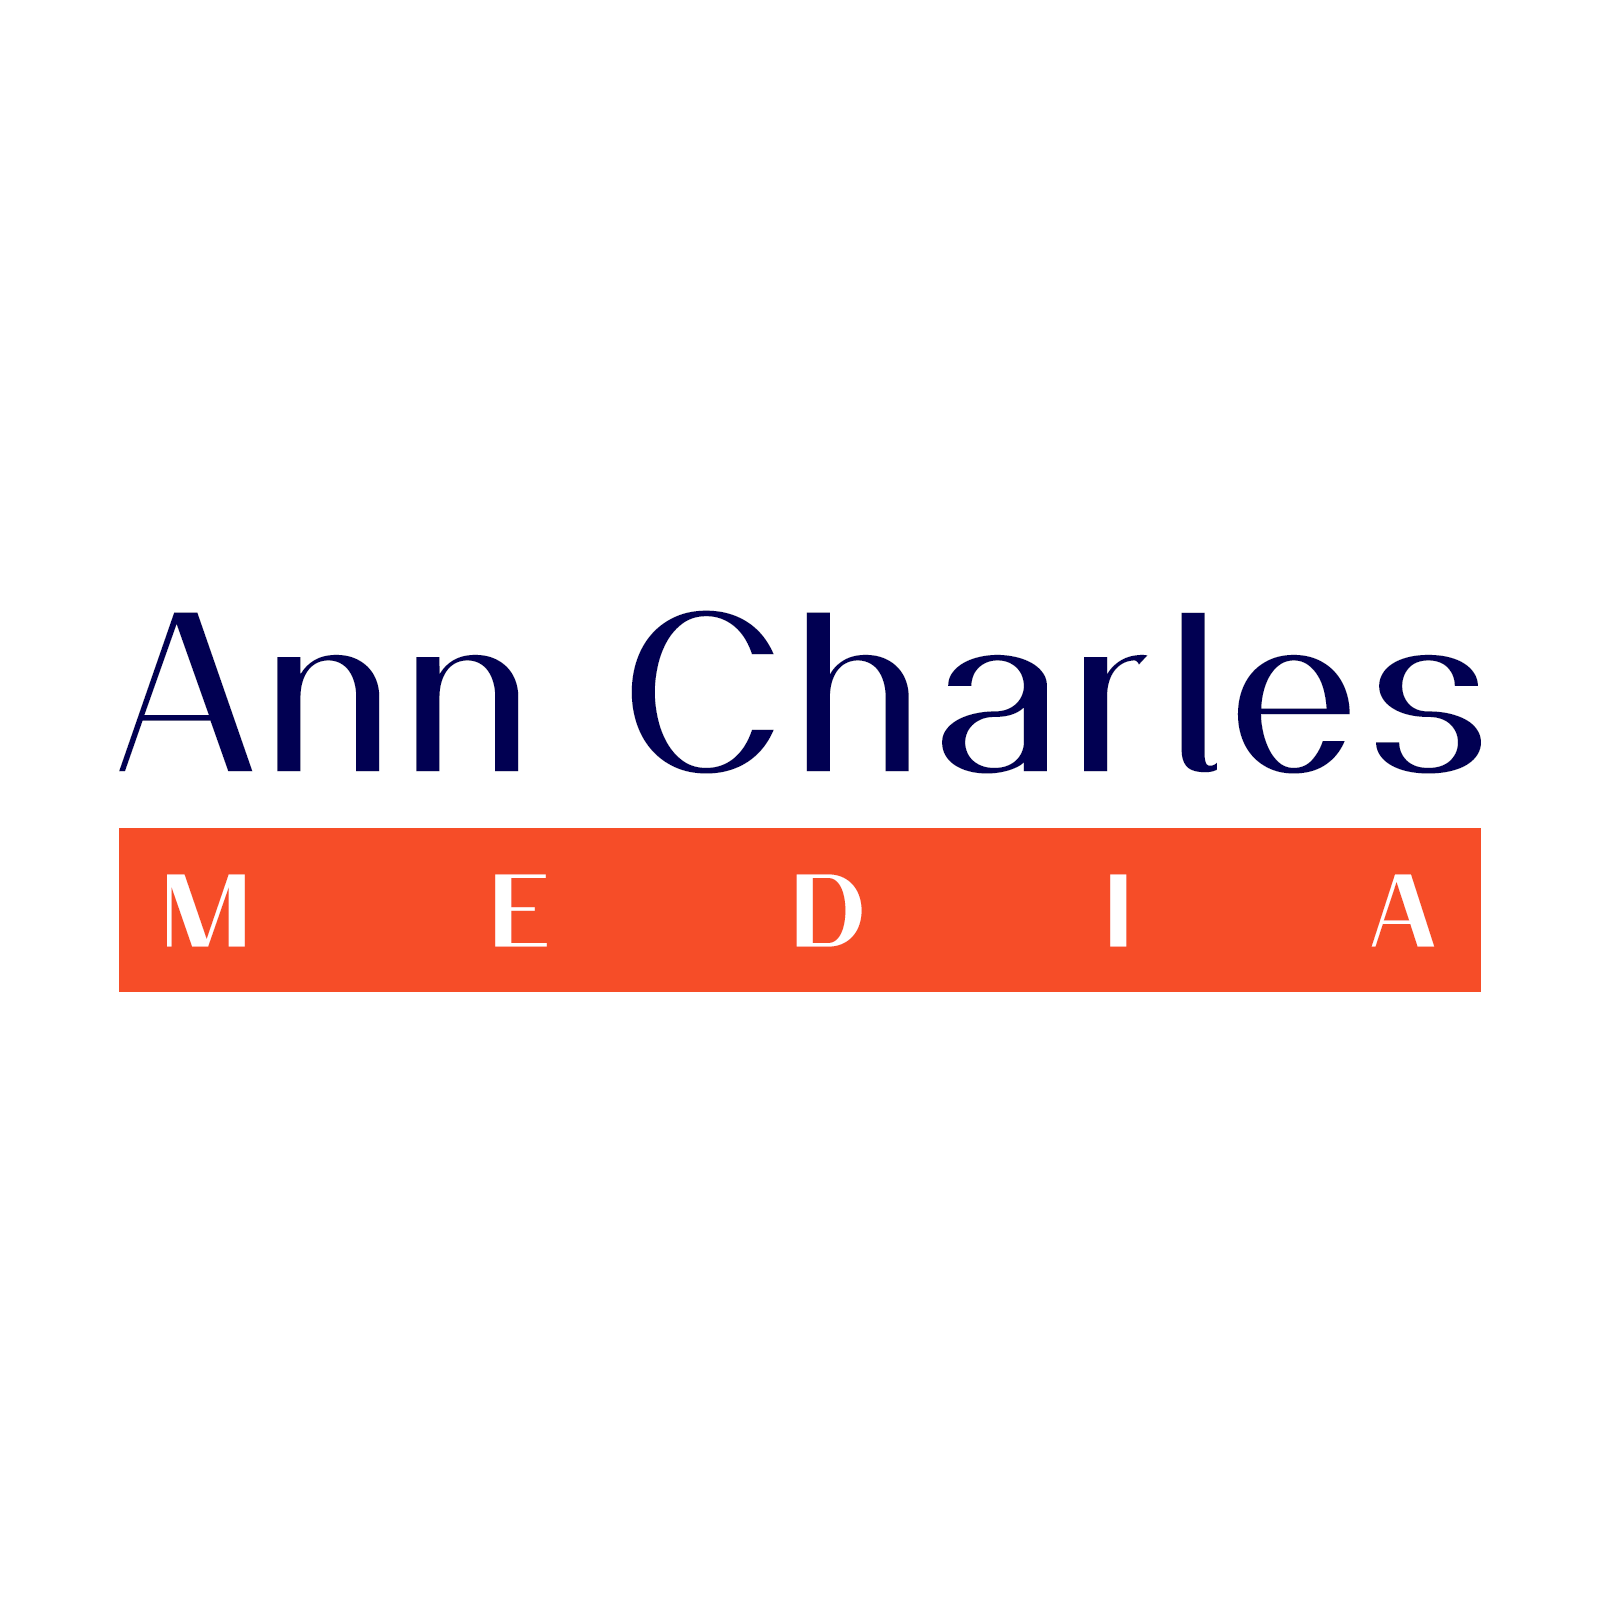 Ann Charles Media logo